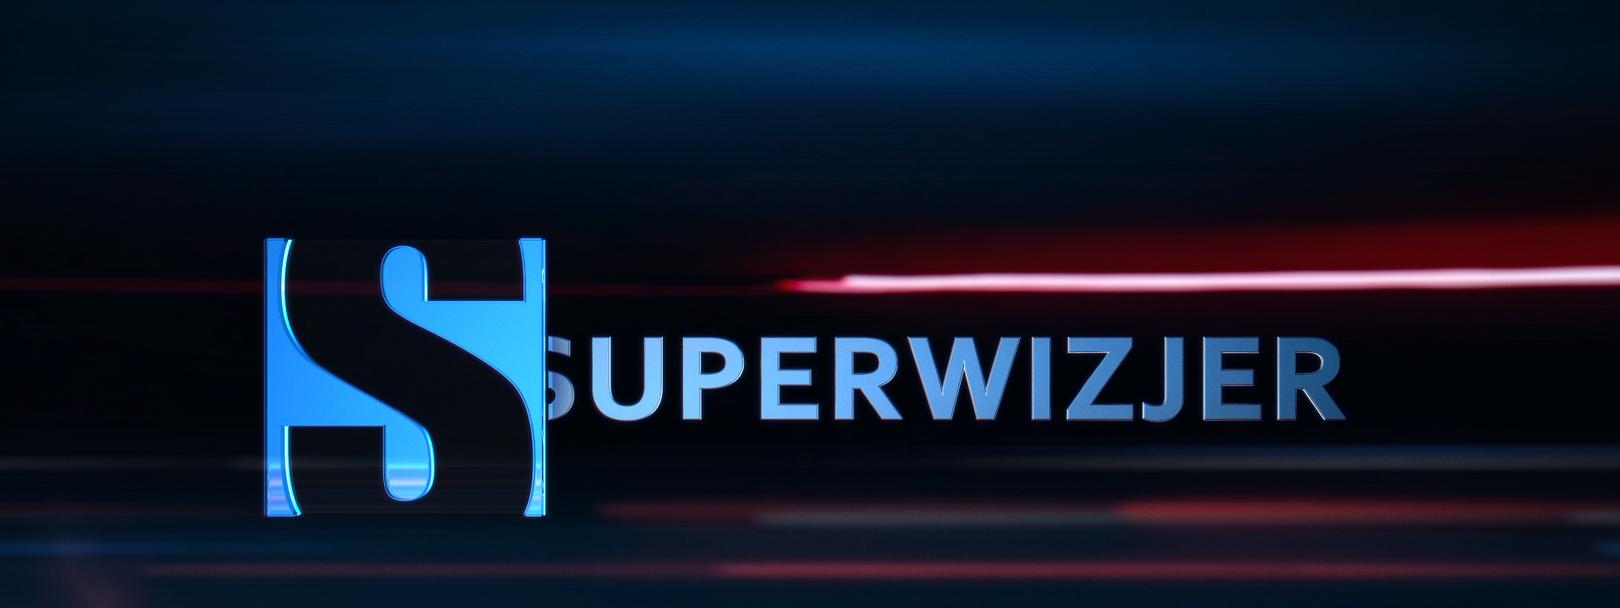 Logo Superwizjera